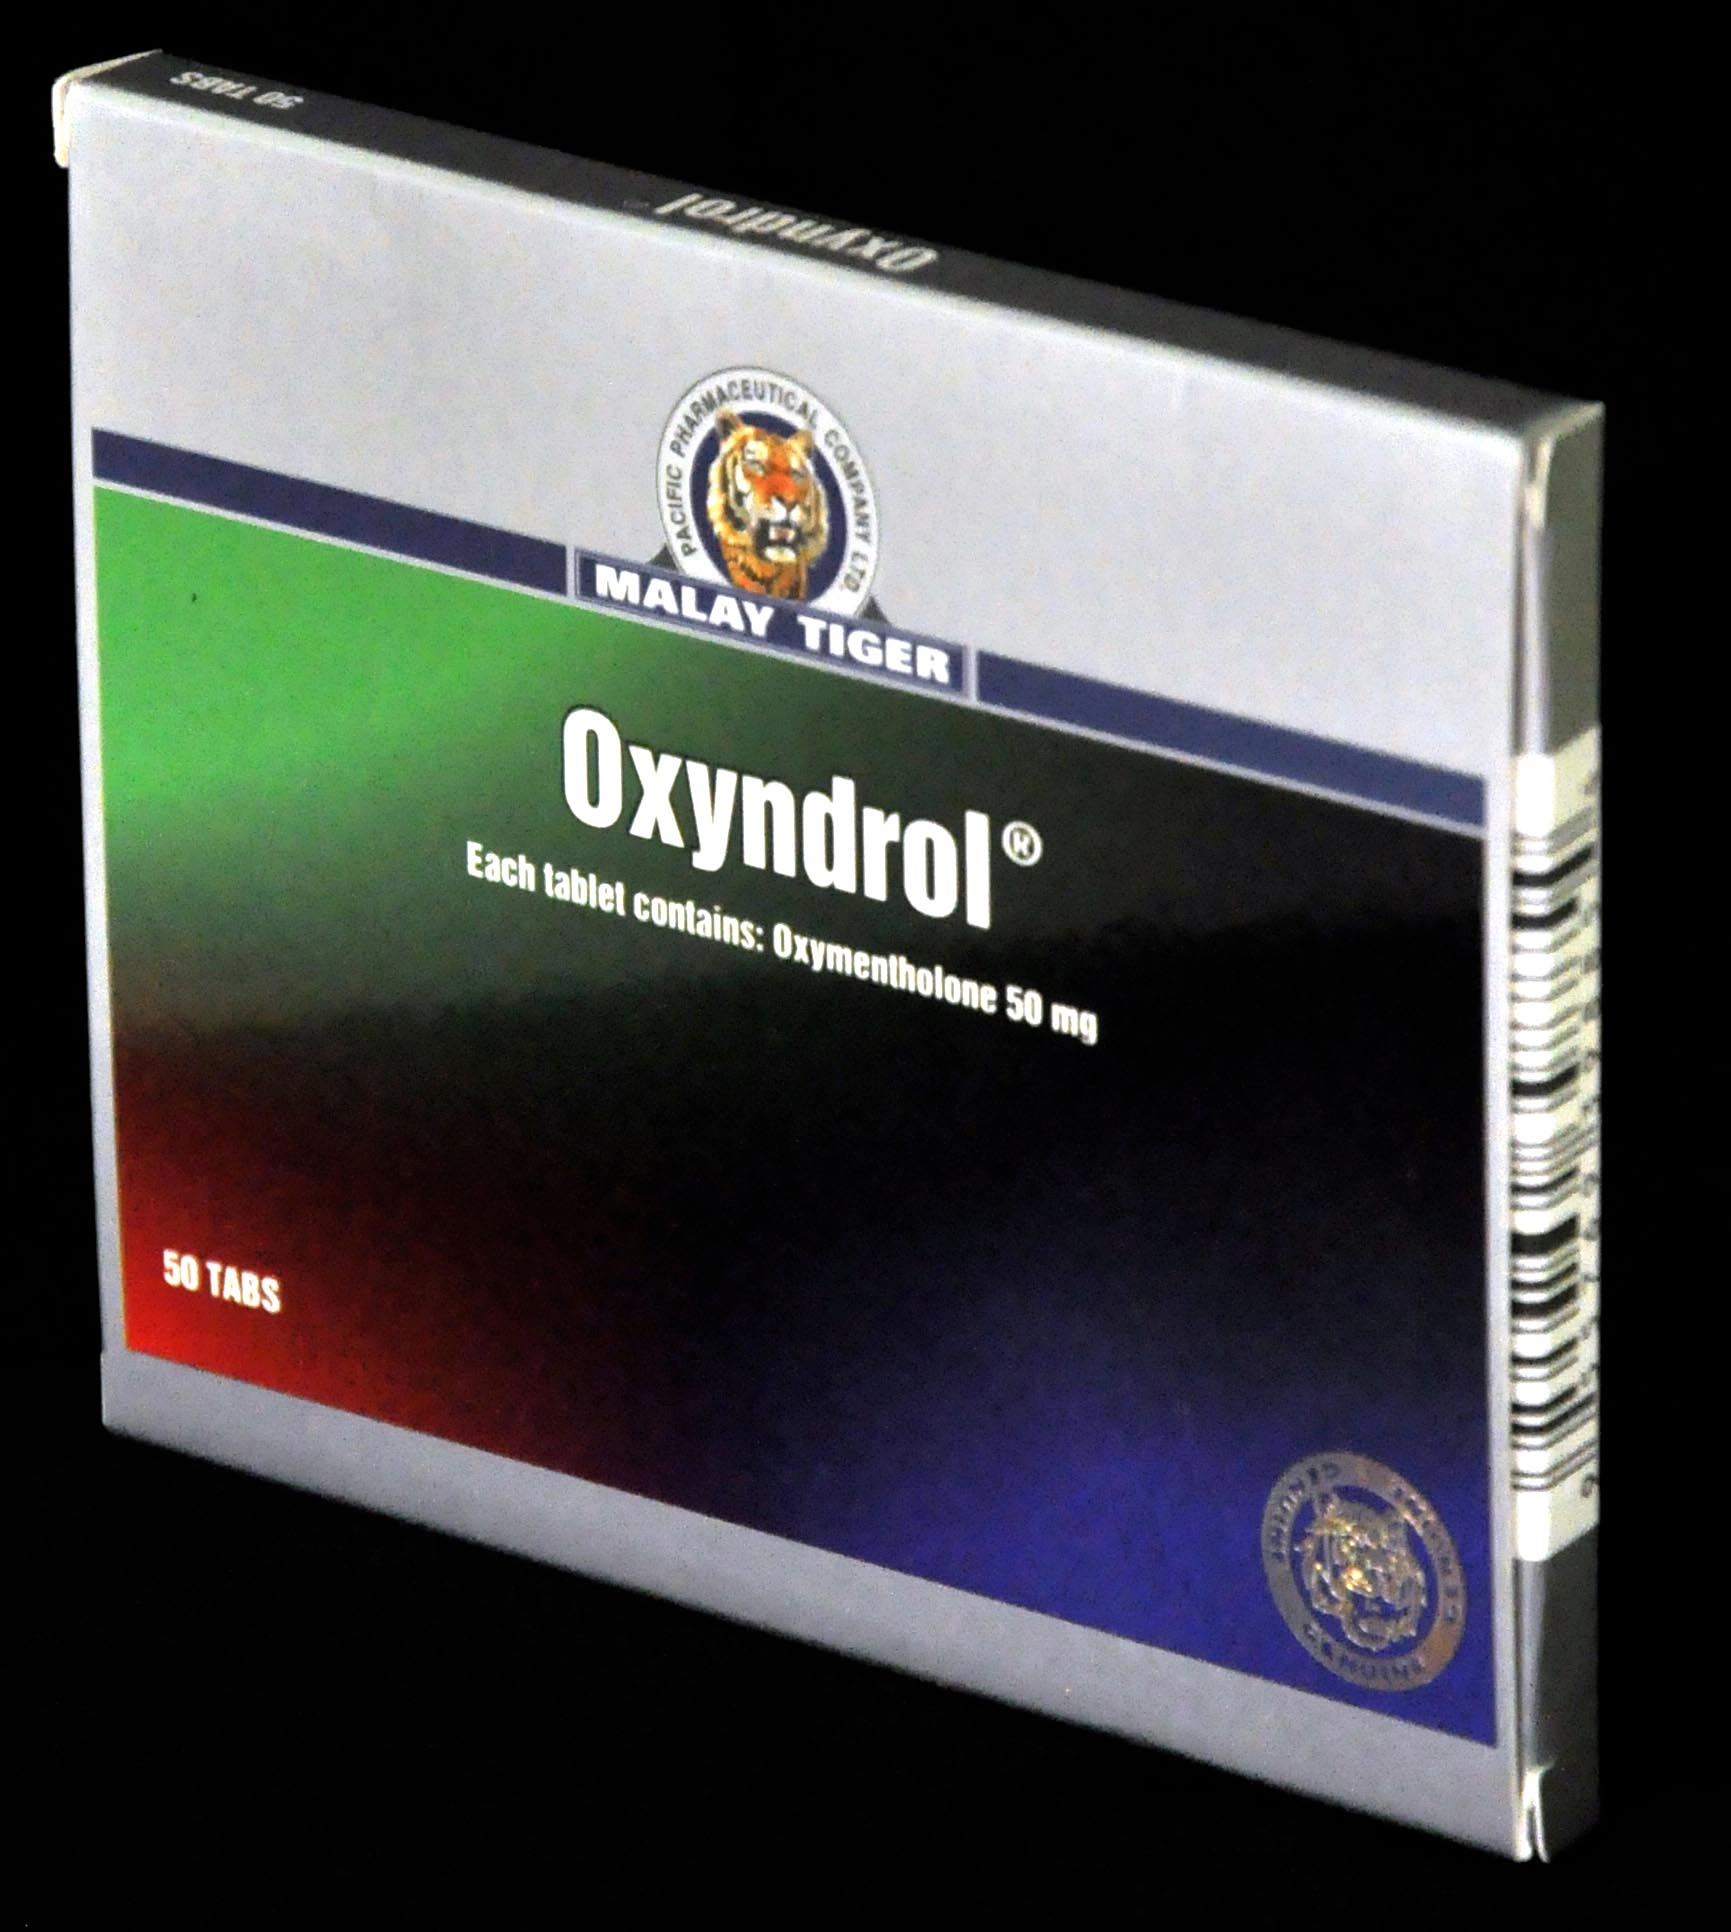 Oxyndrol